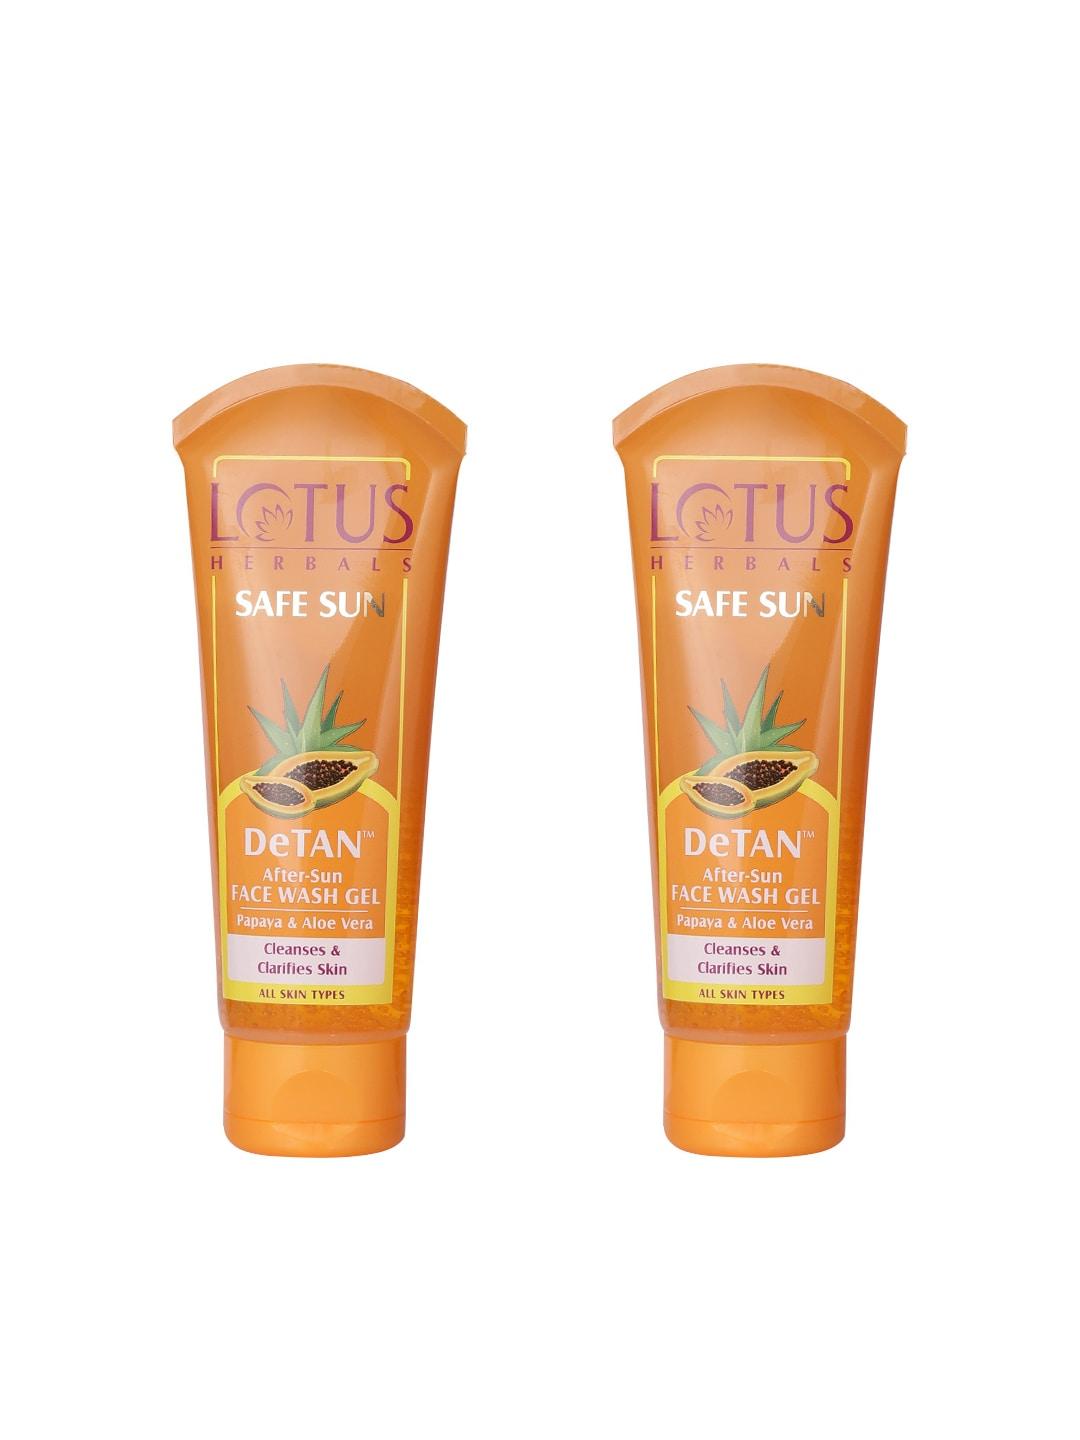 Lotus Herbals Set of 2 Safe Sun DeTAN After-Sun Face Wash Gel - 100g each